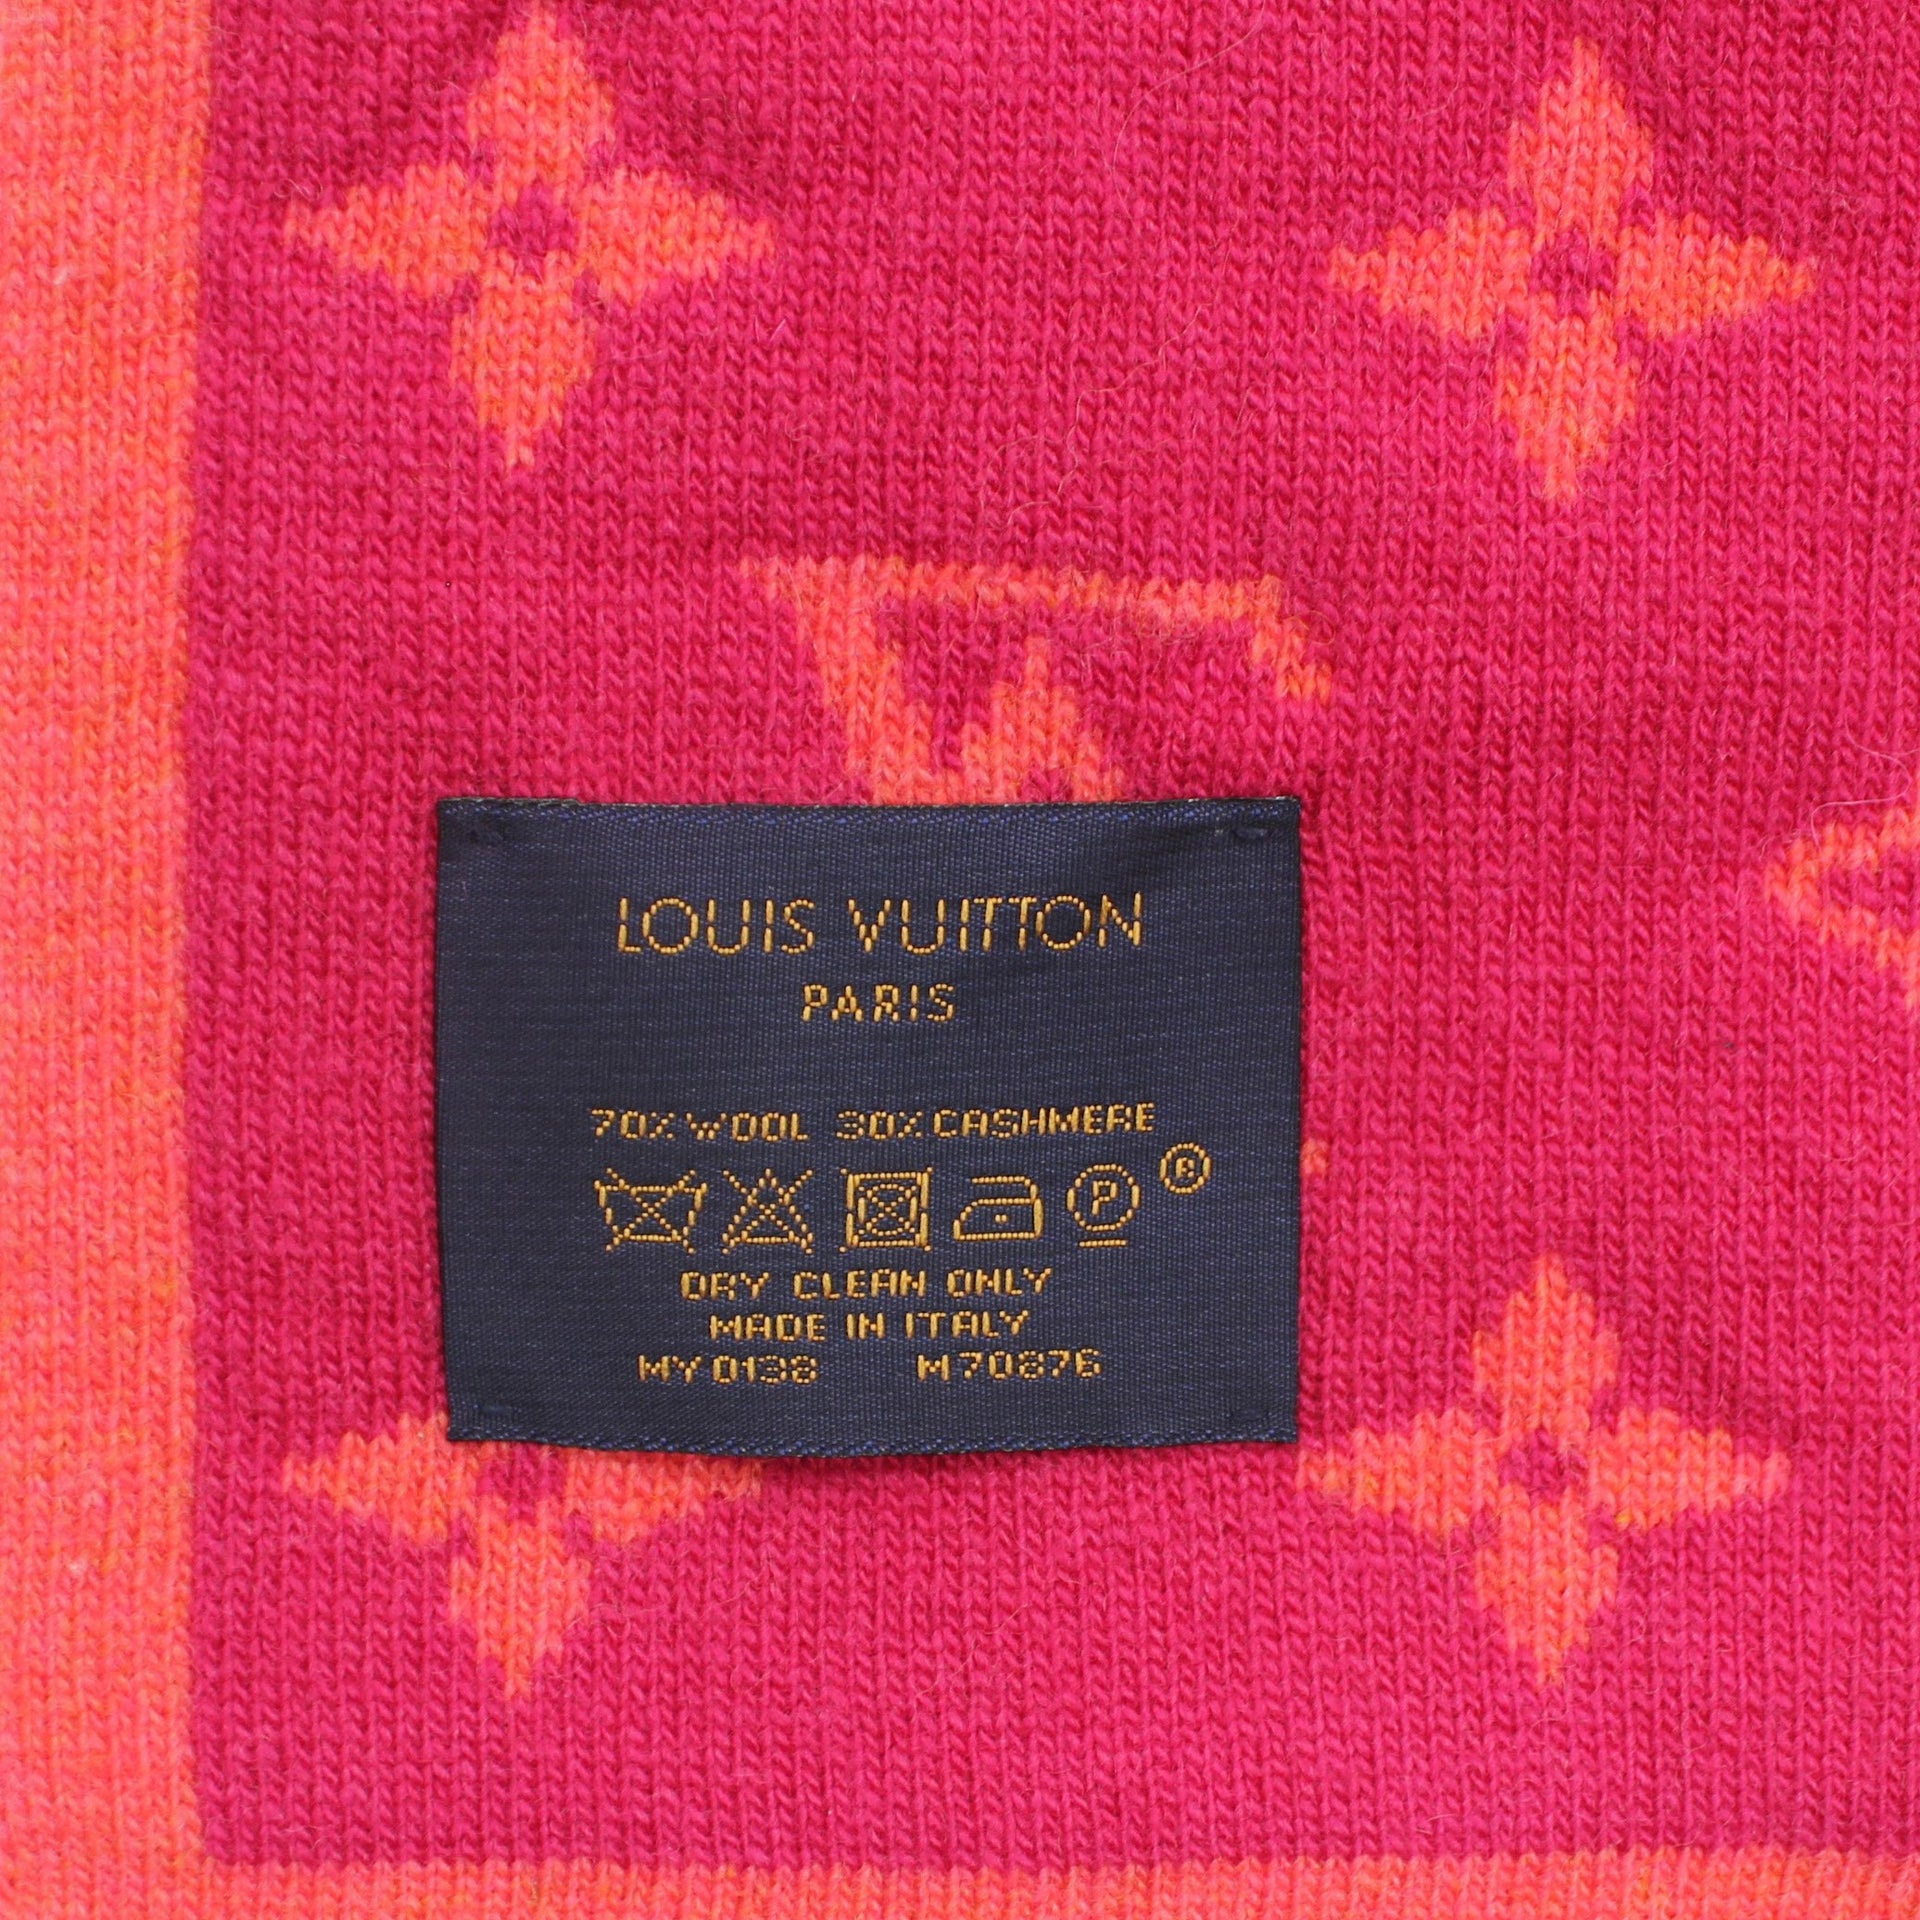 Louis Vuitton, fabulous!  Louis vuitton scarf, Prada gifts, Louis vuitton